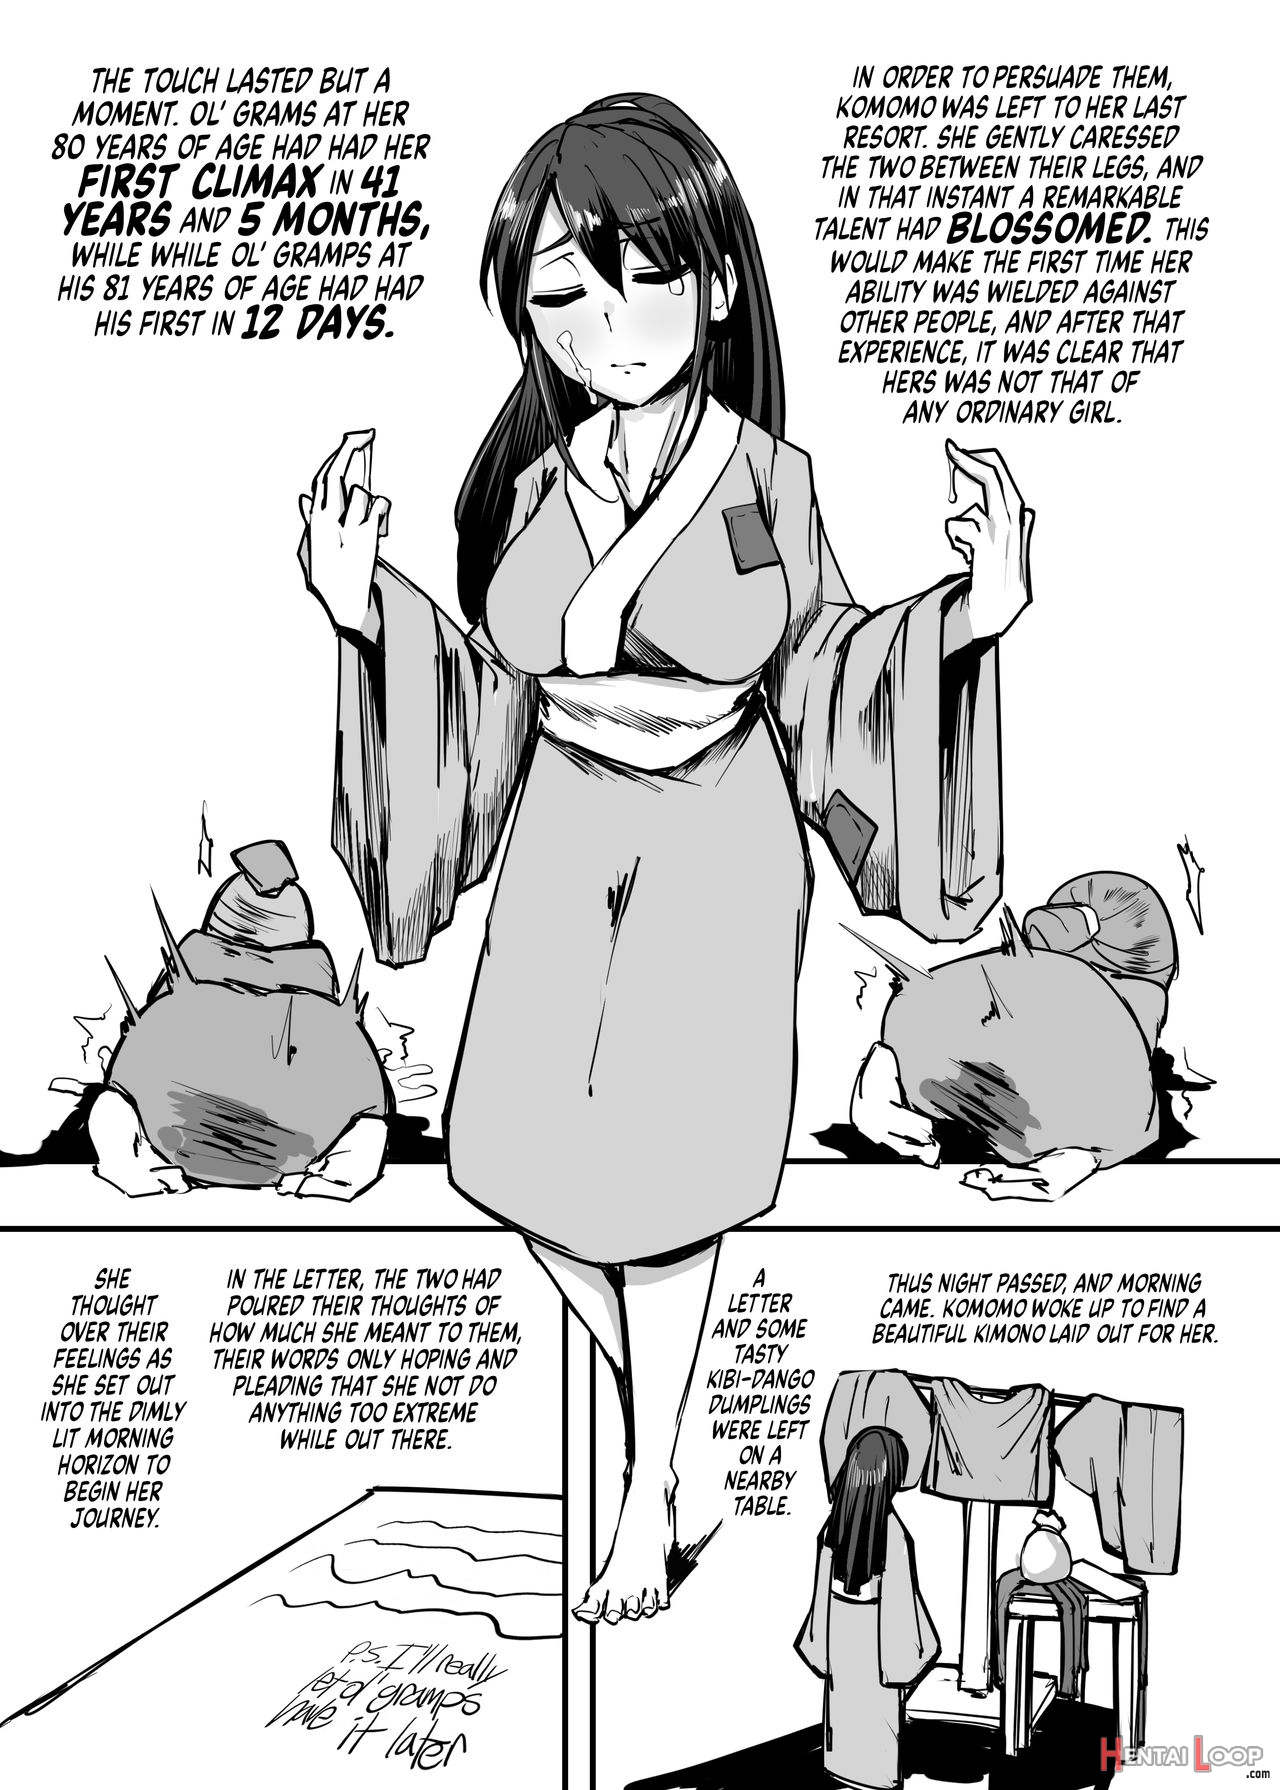 The Old Bullshit Japanese Folktales 3 page 6